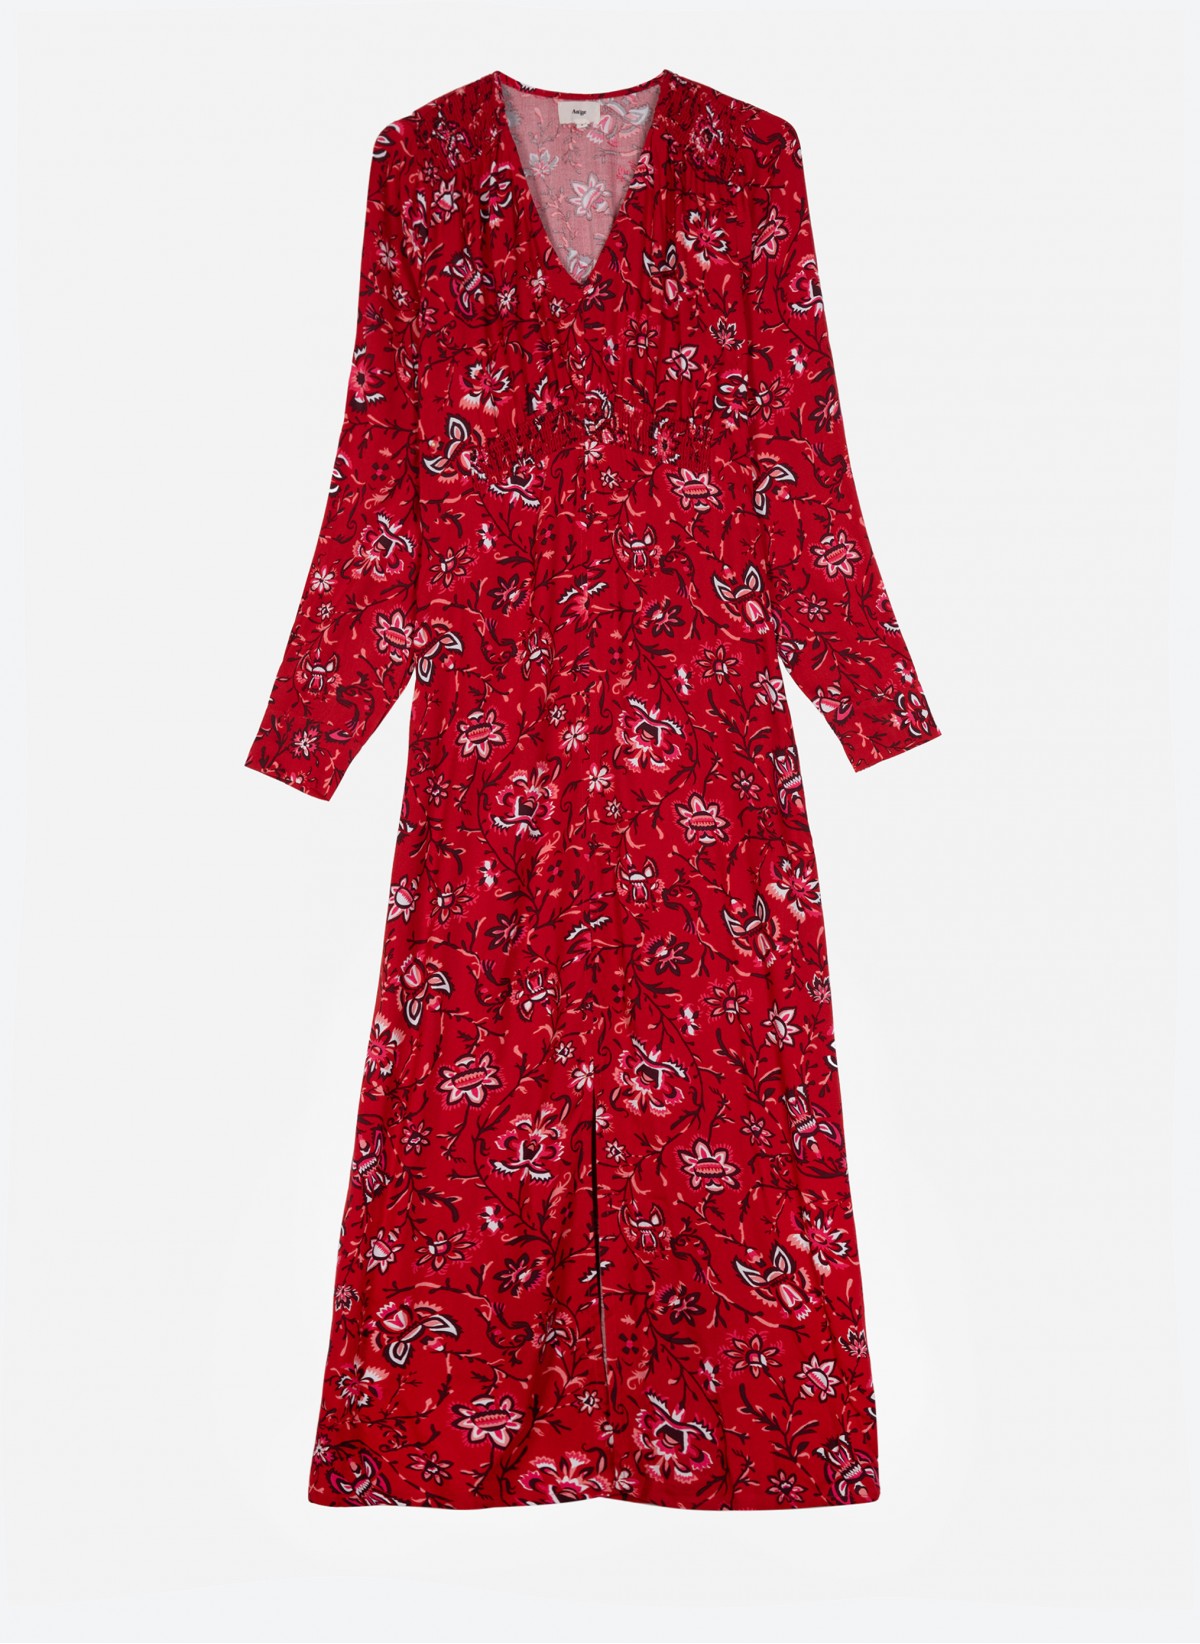 Ange Dress Ange Olivia Midi Dress in Red Floral